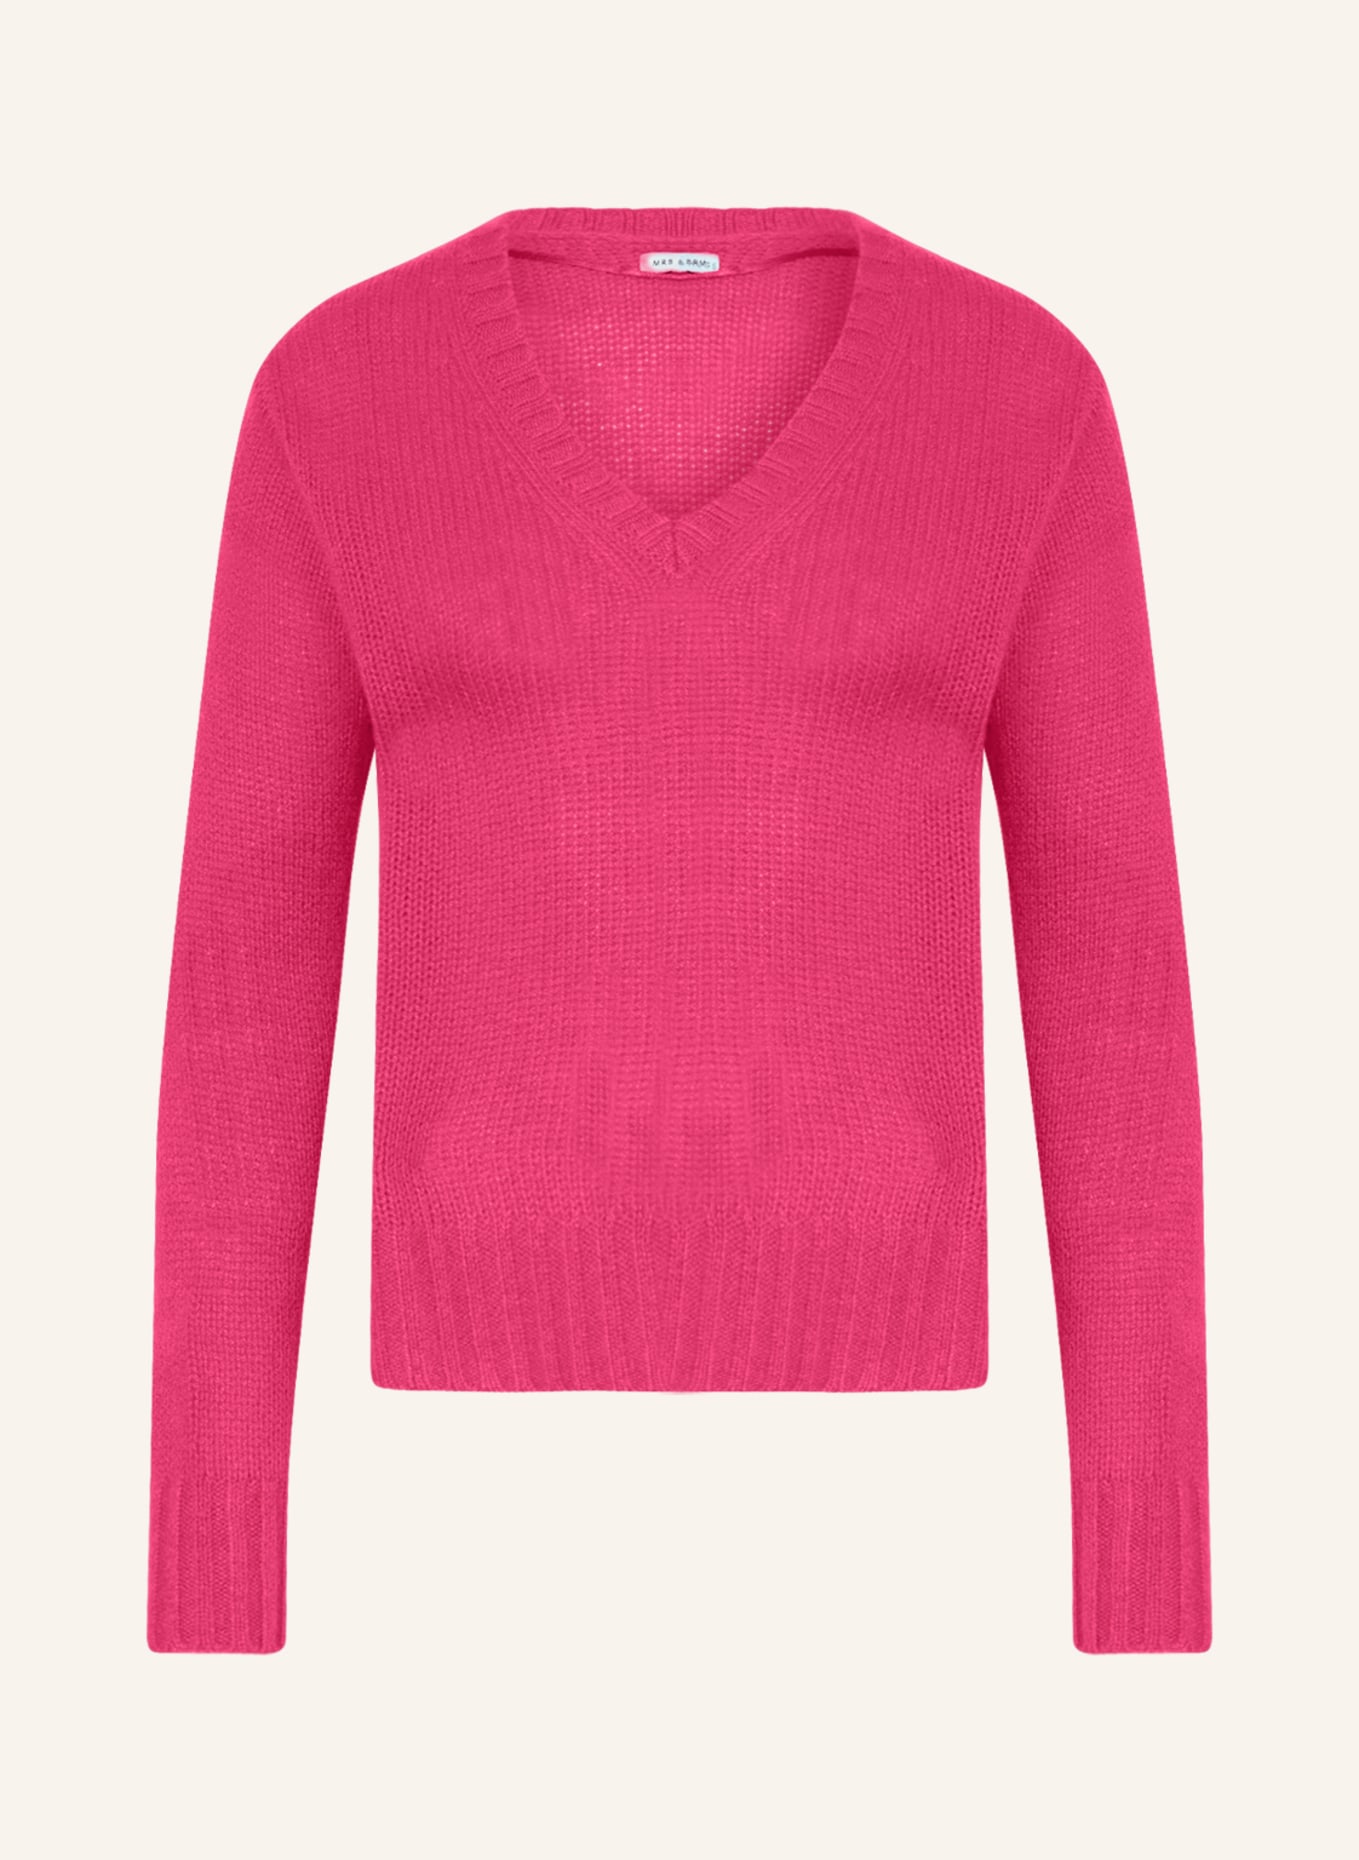 MRS & HUGS Cashmere-Pullover, Farbe: PINK (Bild 1)